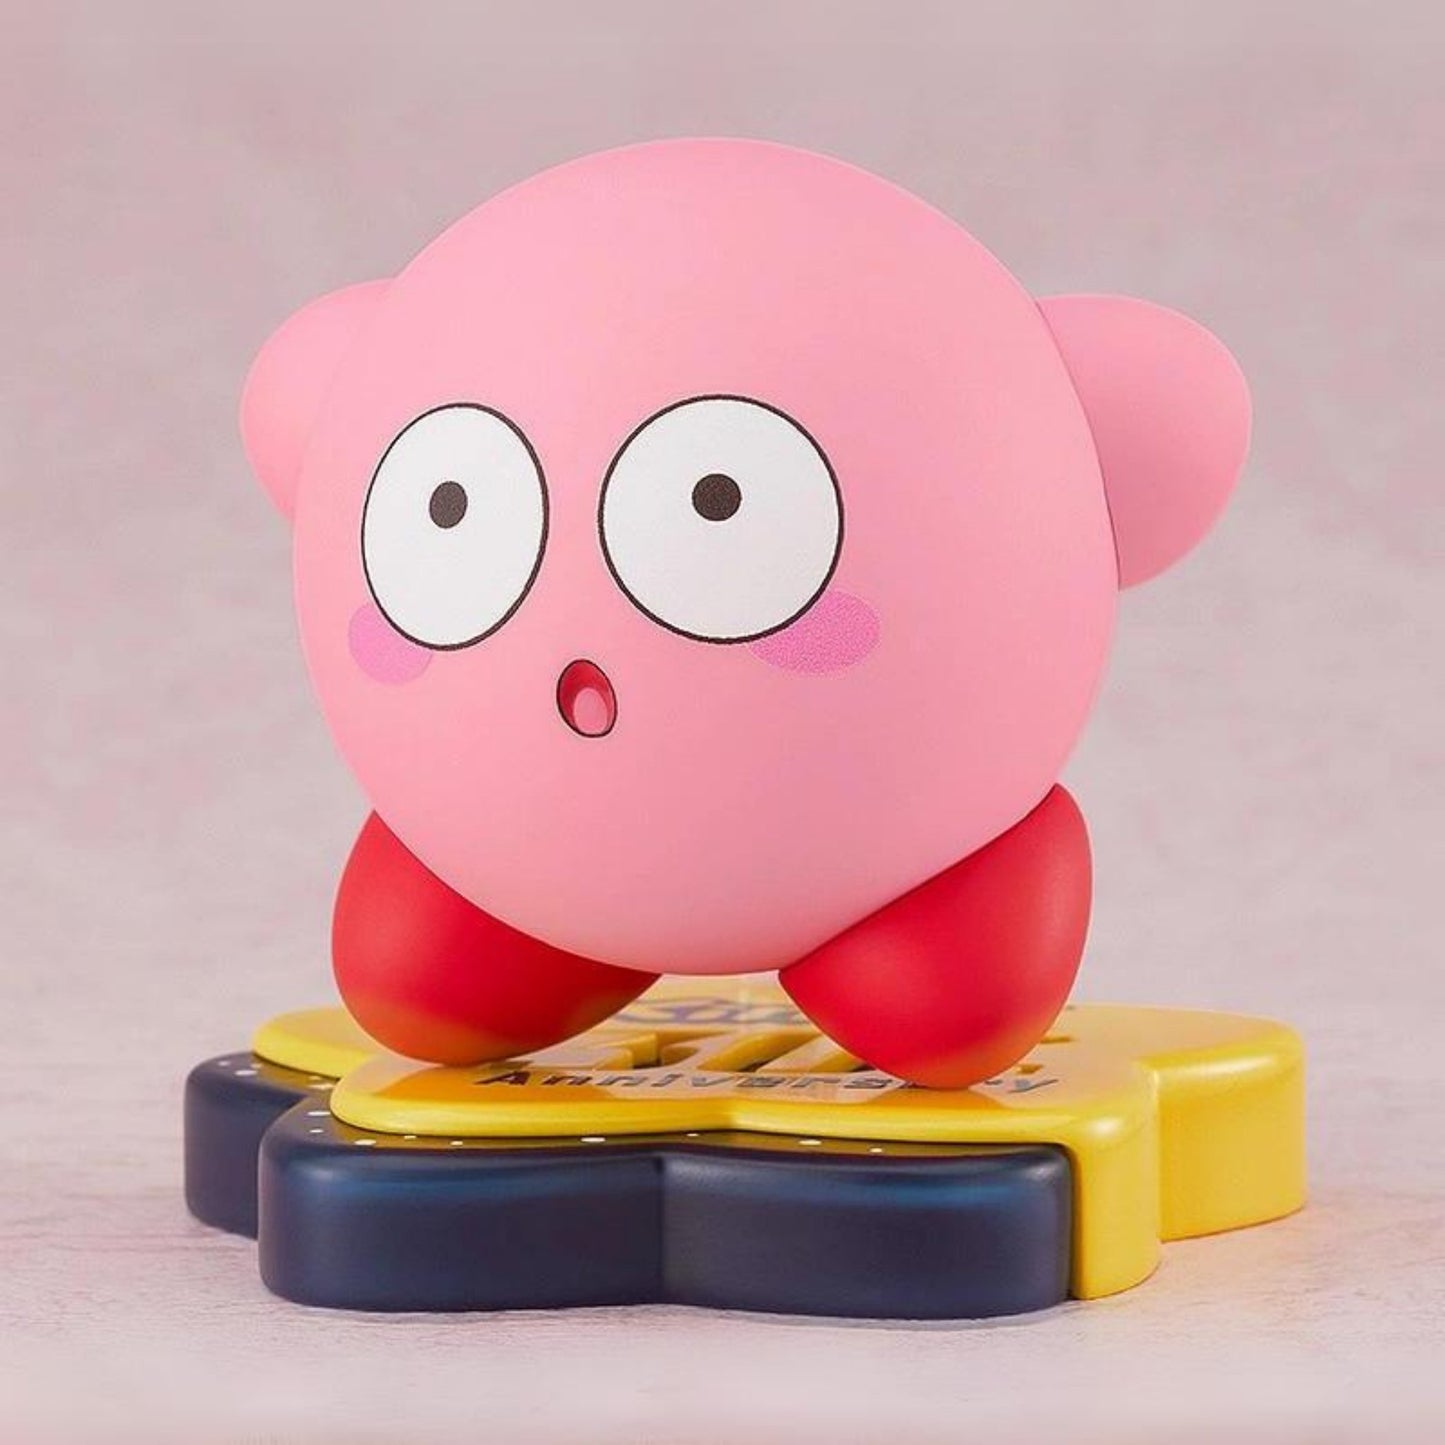 Nendoroid Kirby 30th Anniversary Edition - Nintendo